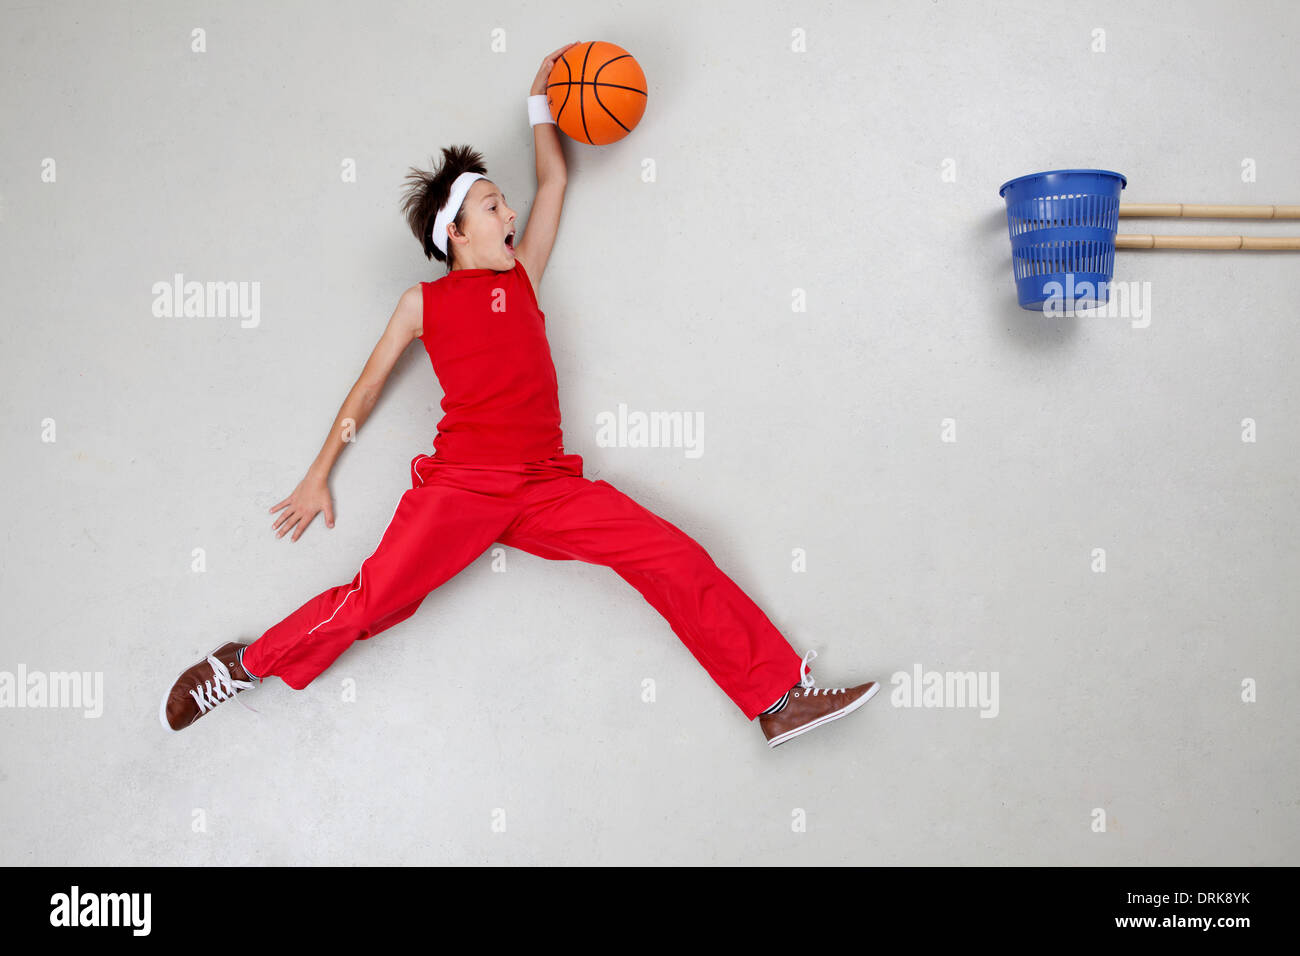 Boy playing basket ball Stock Photo